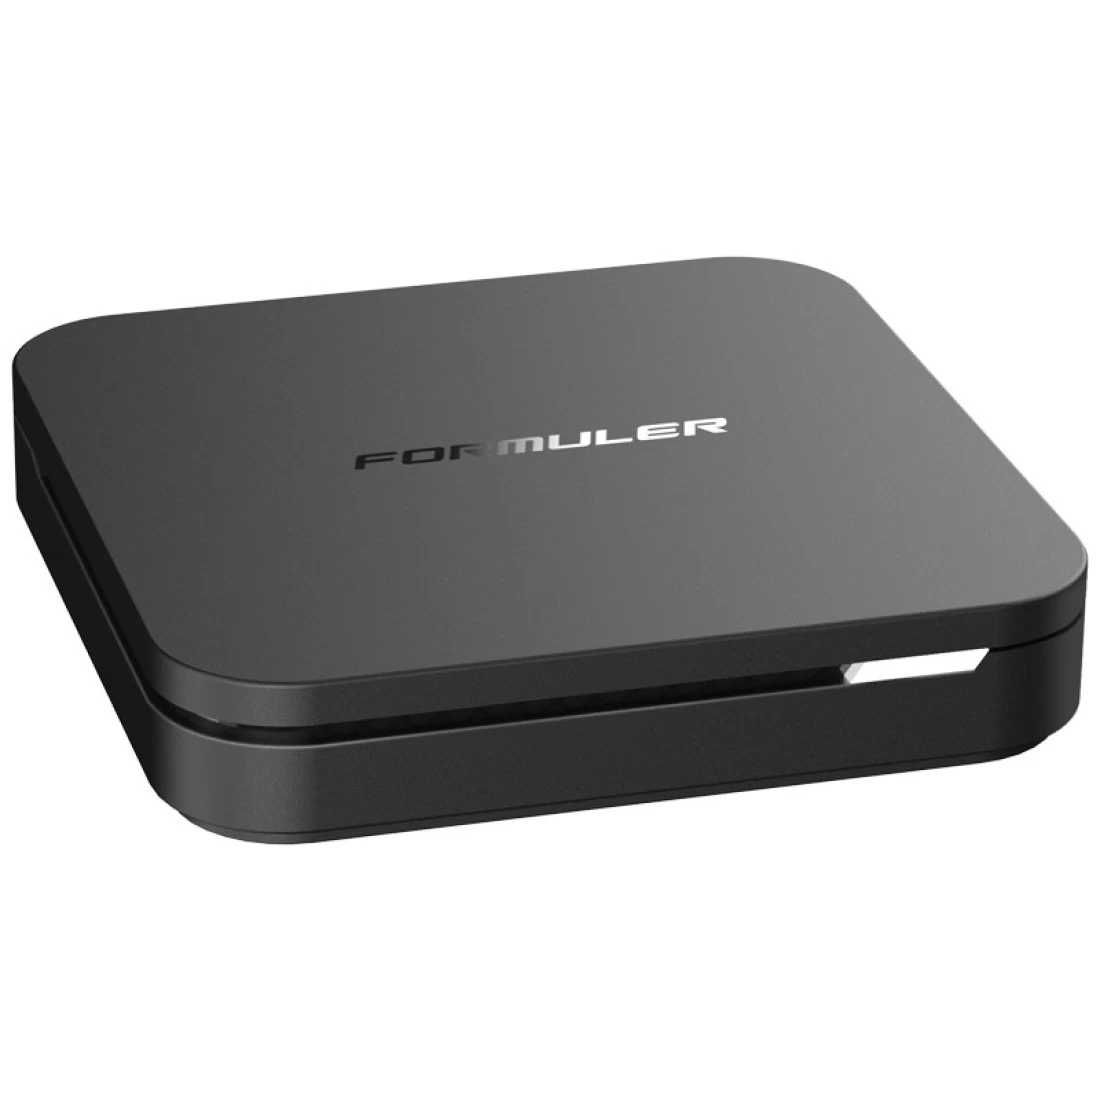 BOX Formuler Z10 SE Box 4K IPTV Android 10